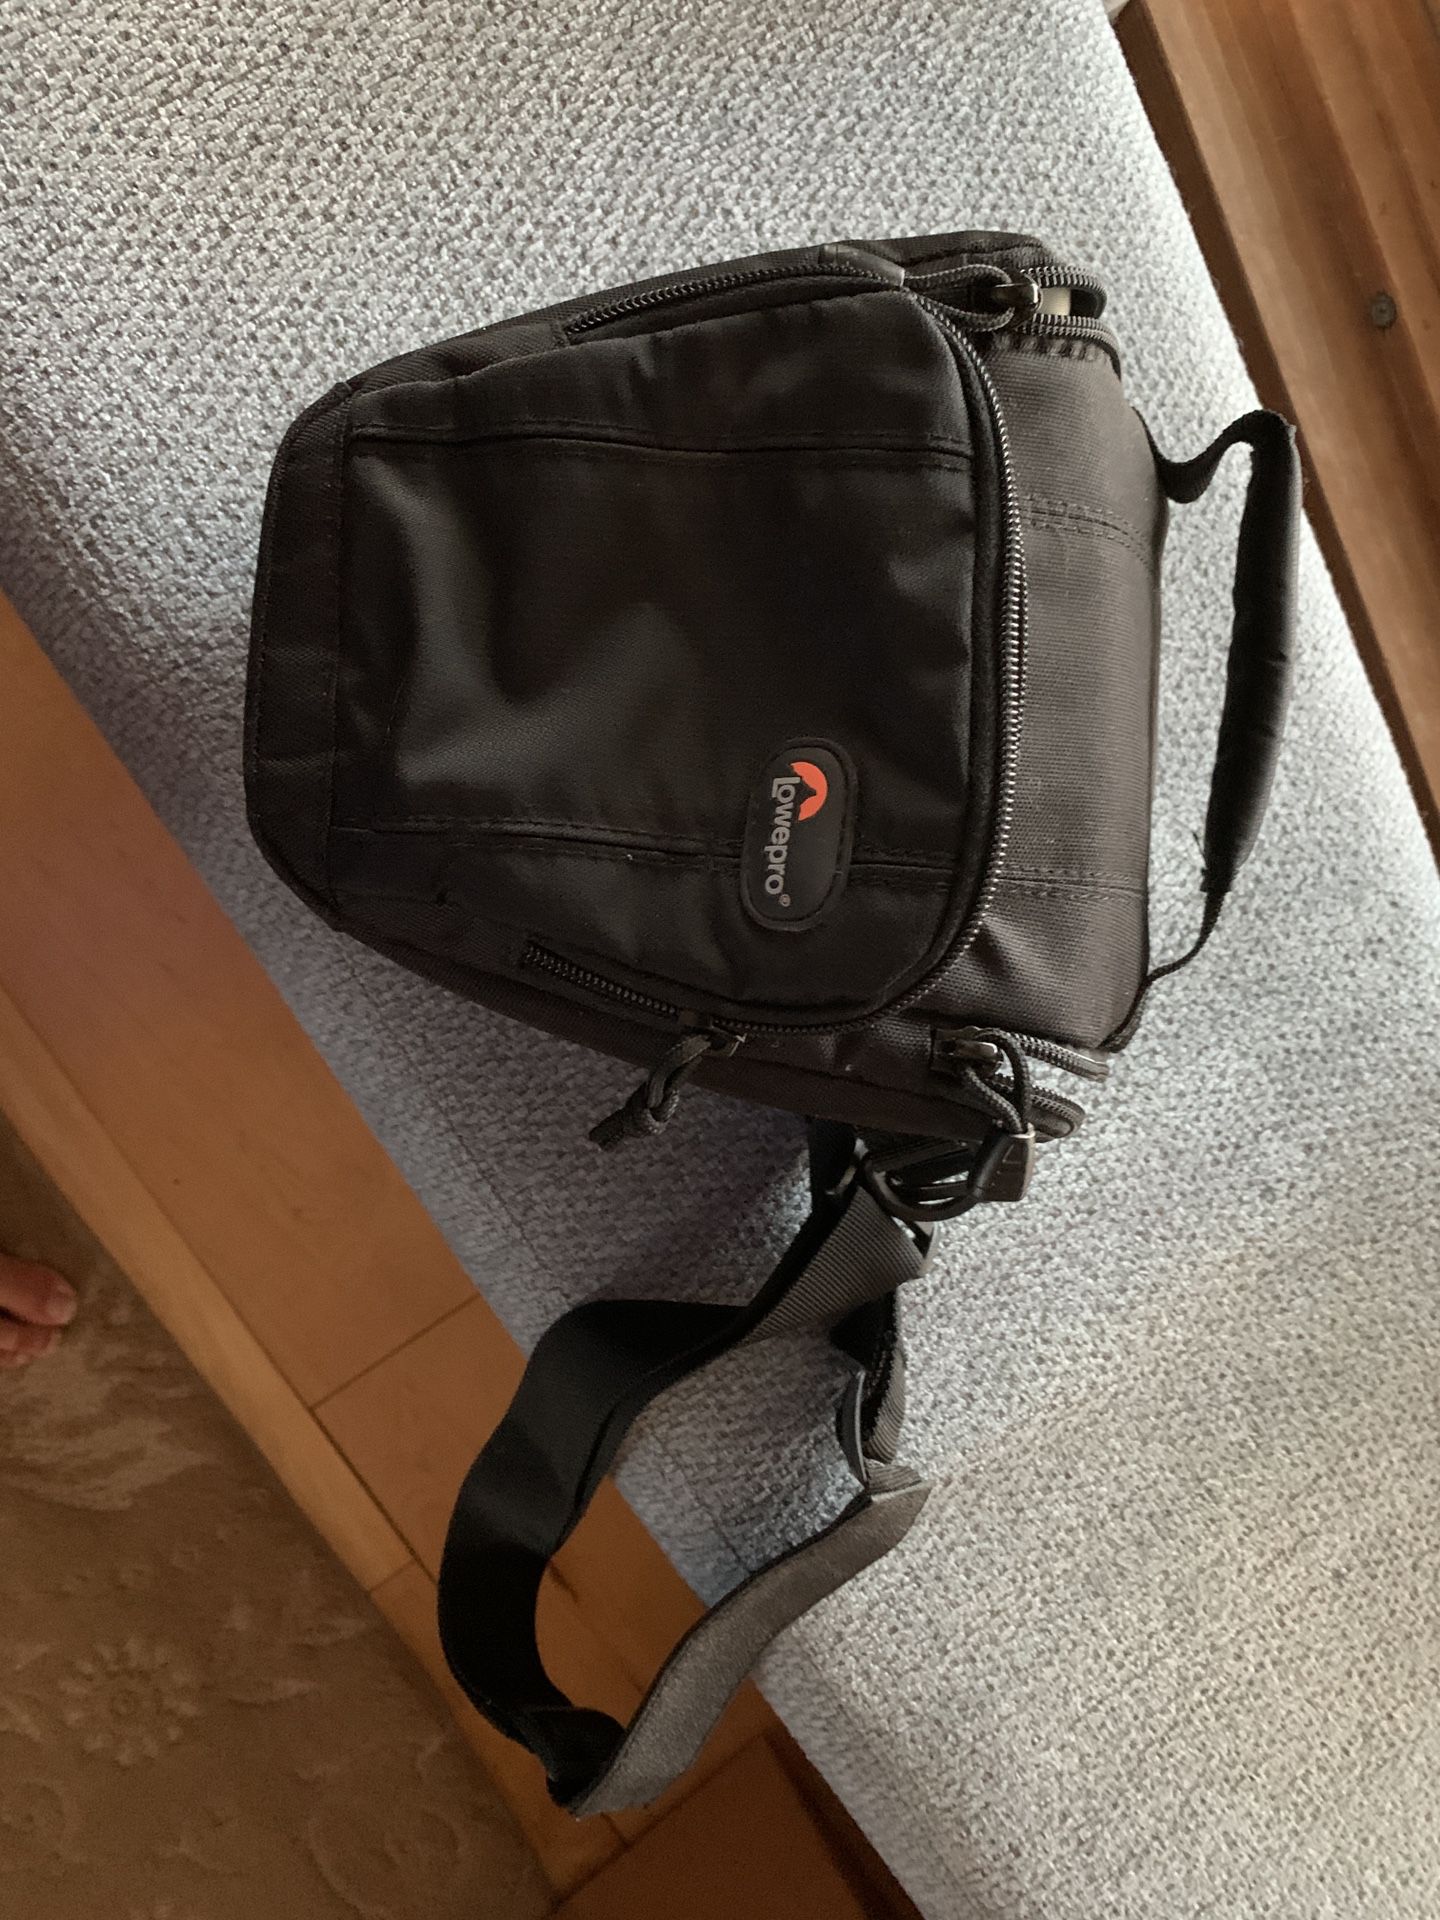 Lowepro Camera Bag 